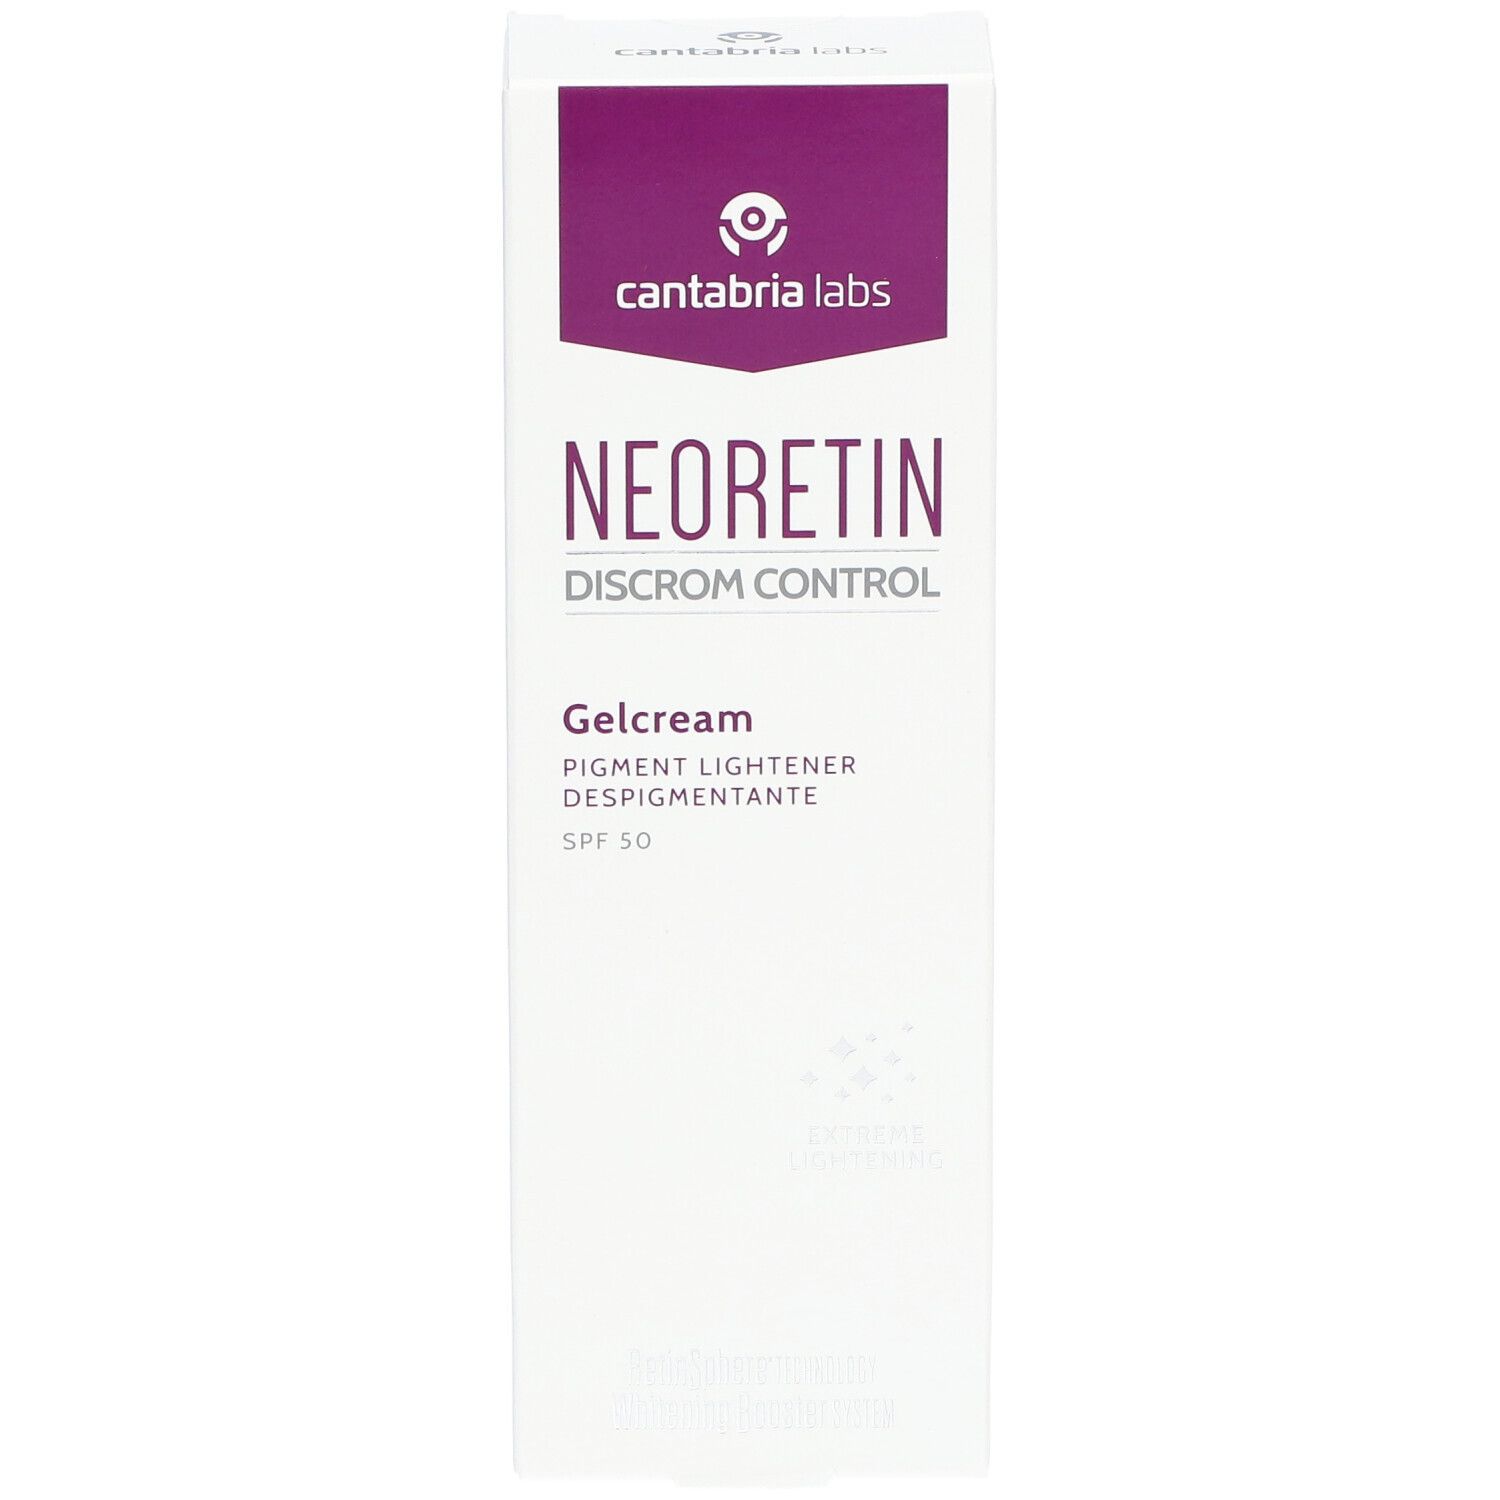 NEORETIN Discrom Control Gelcream SPF 50